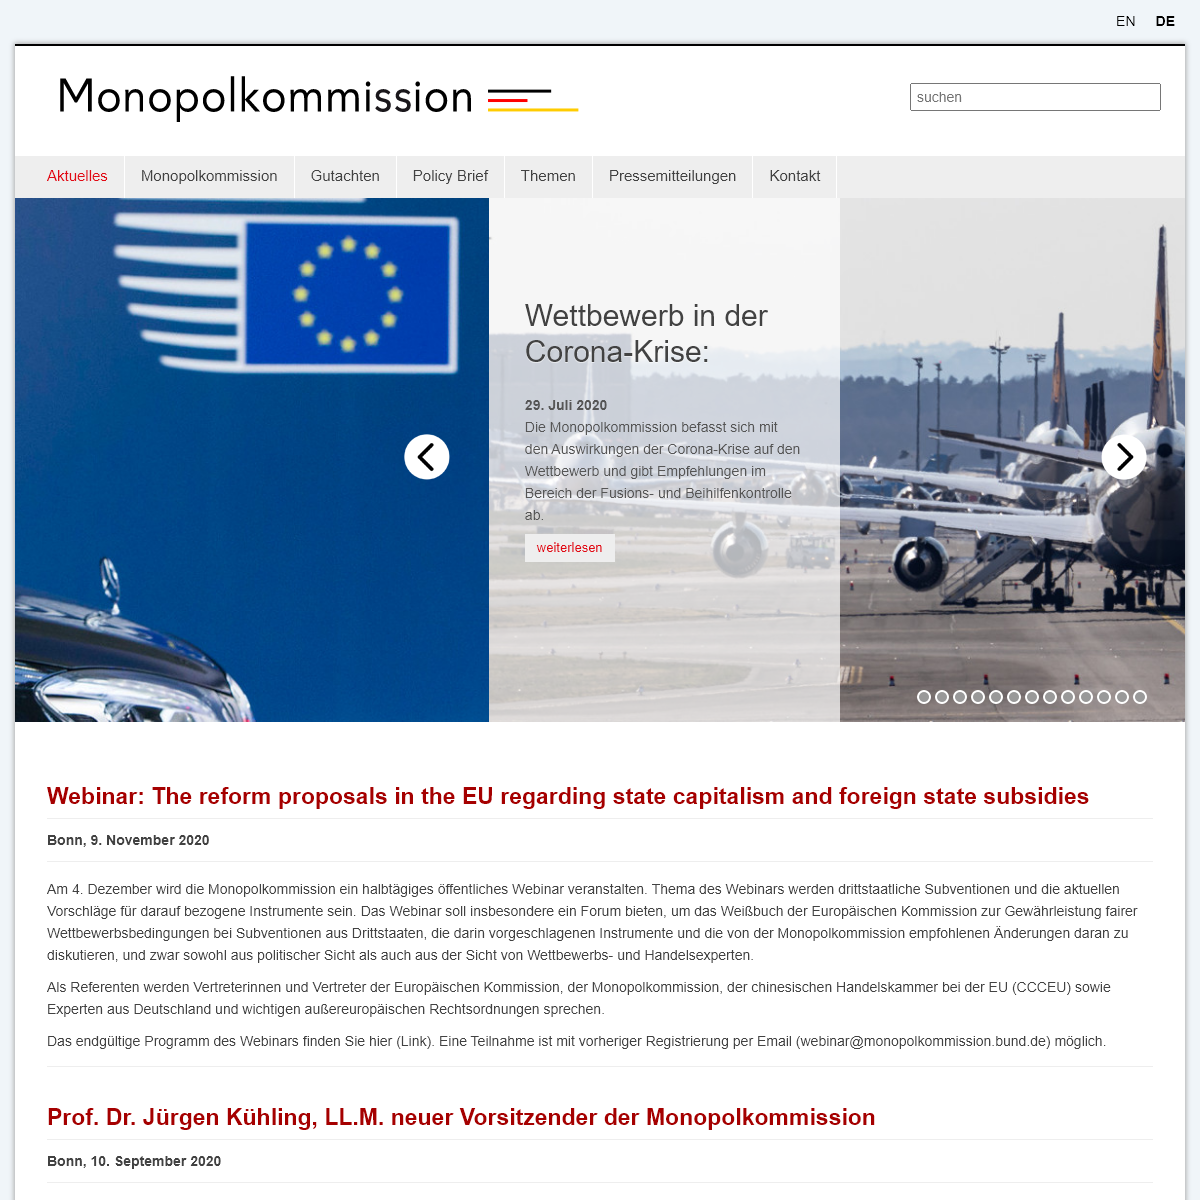 A complete backup of monopolkommission.de